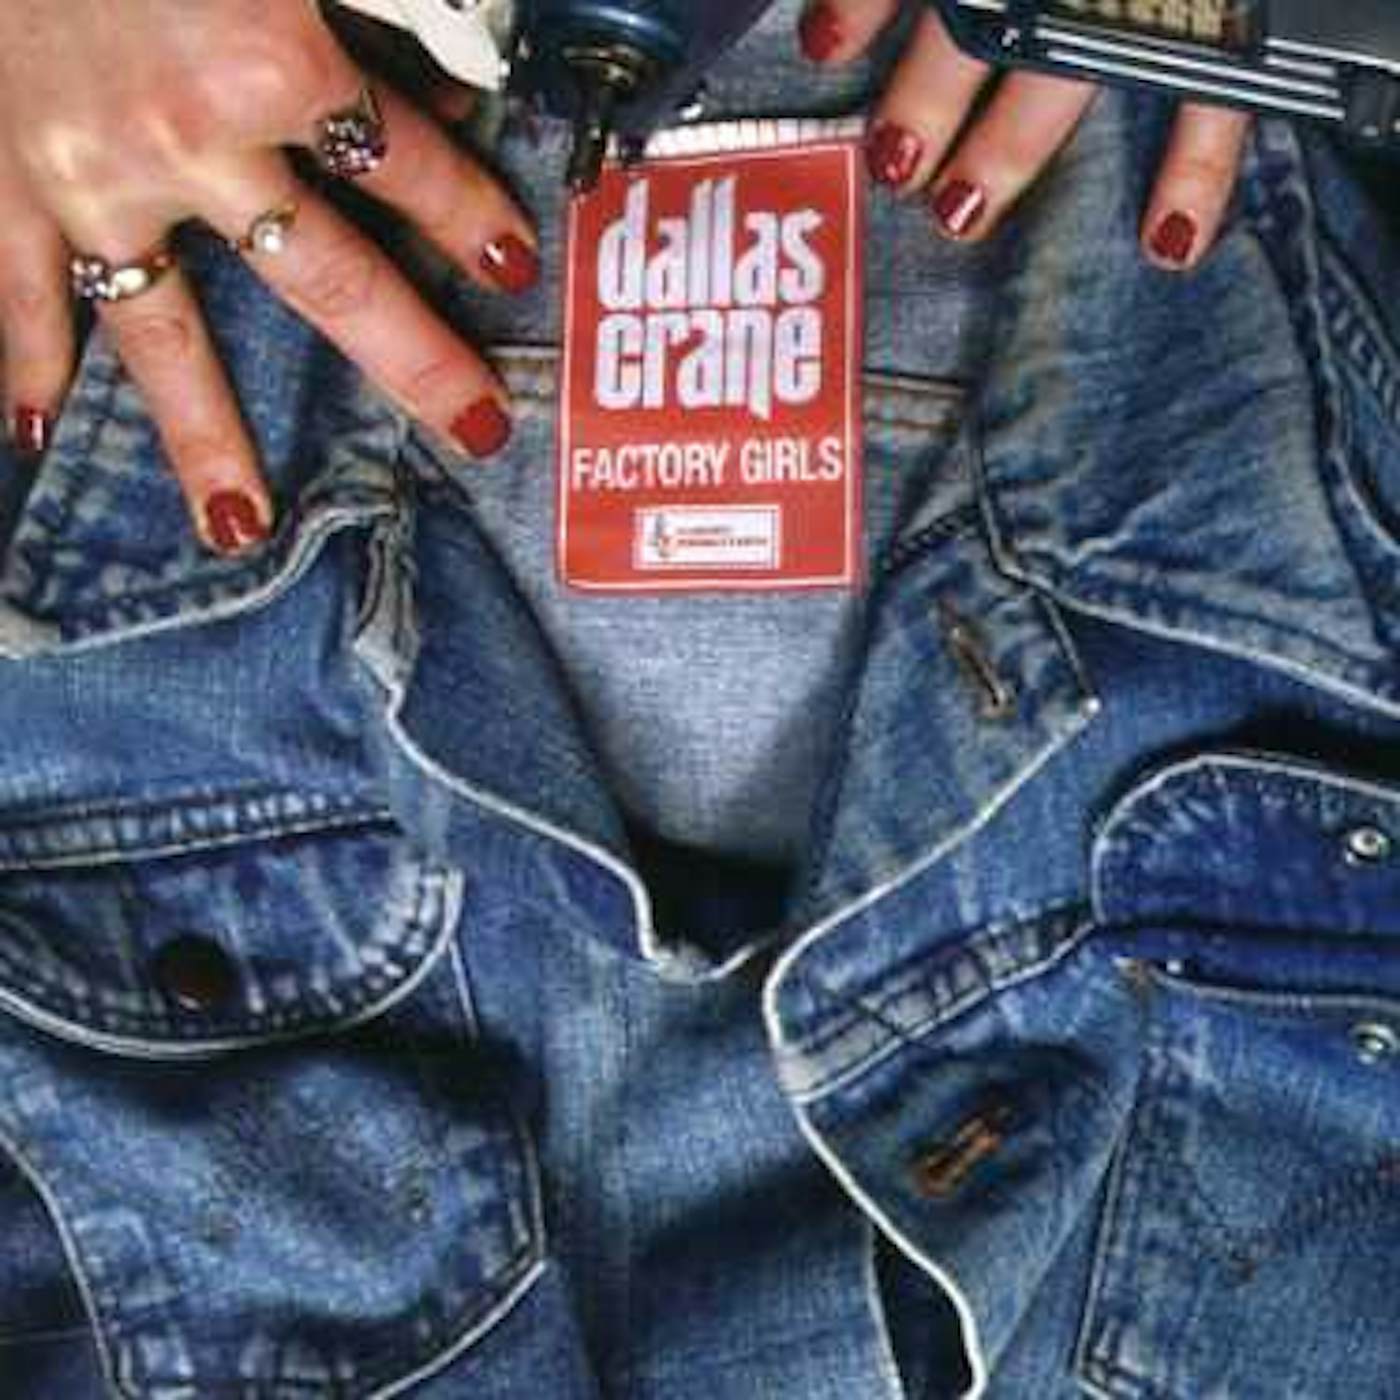 Dallas Crane FACTORY GIRLS CD